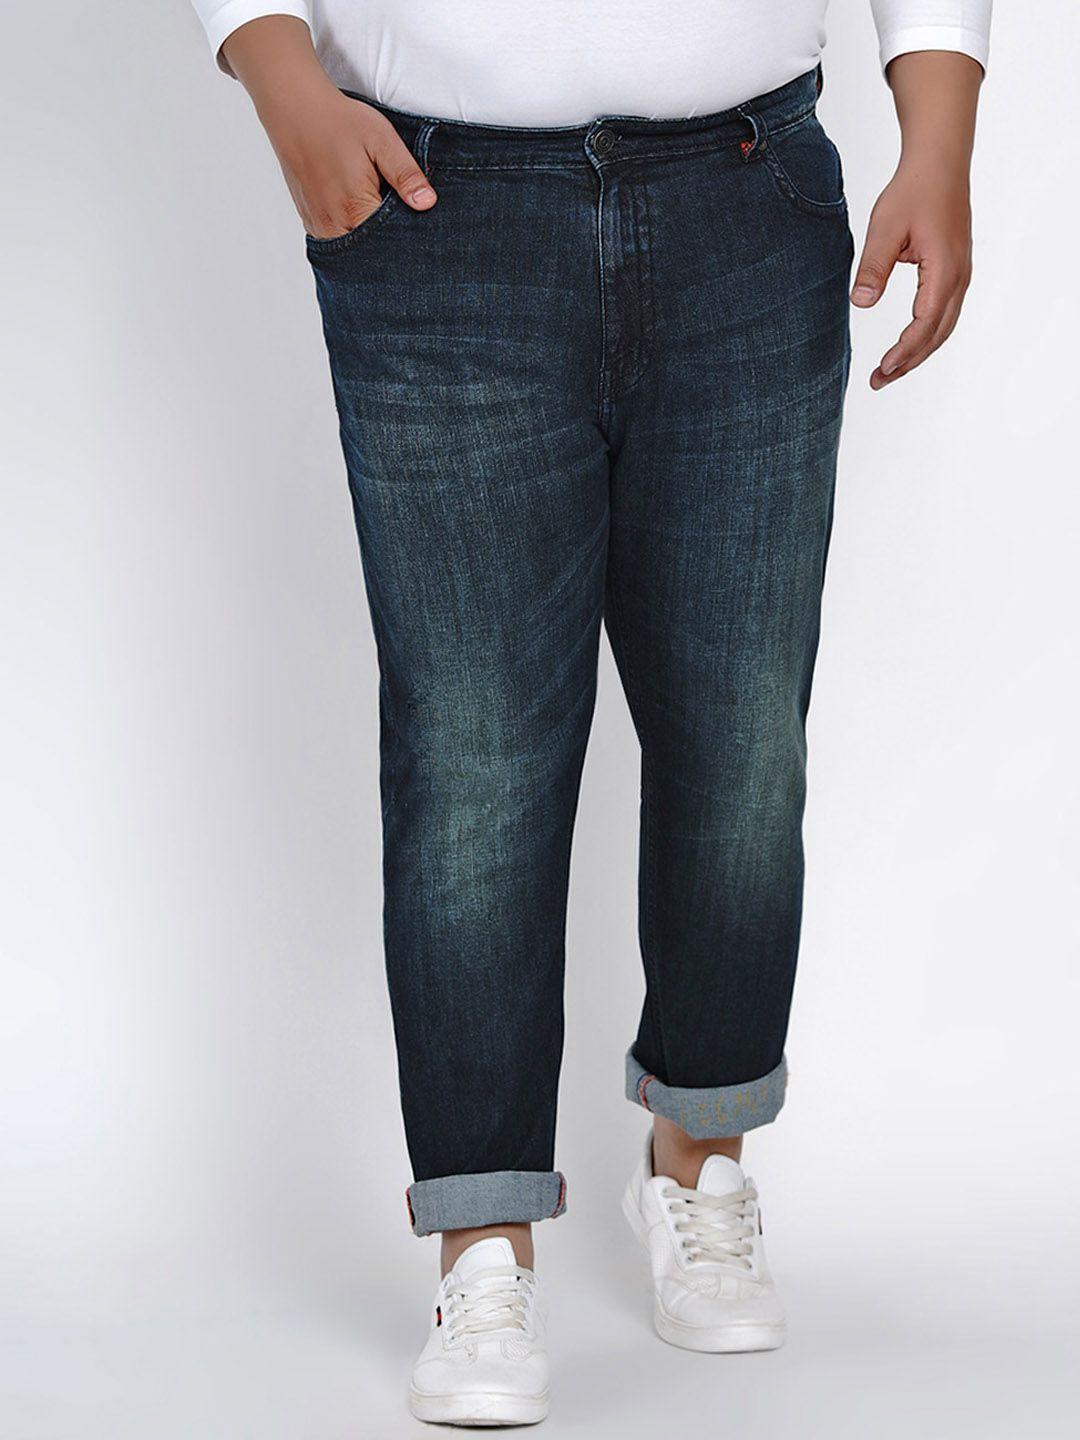 john pride men plus size regular fit comfort light fade stretchable jeans